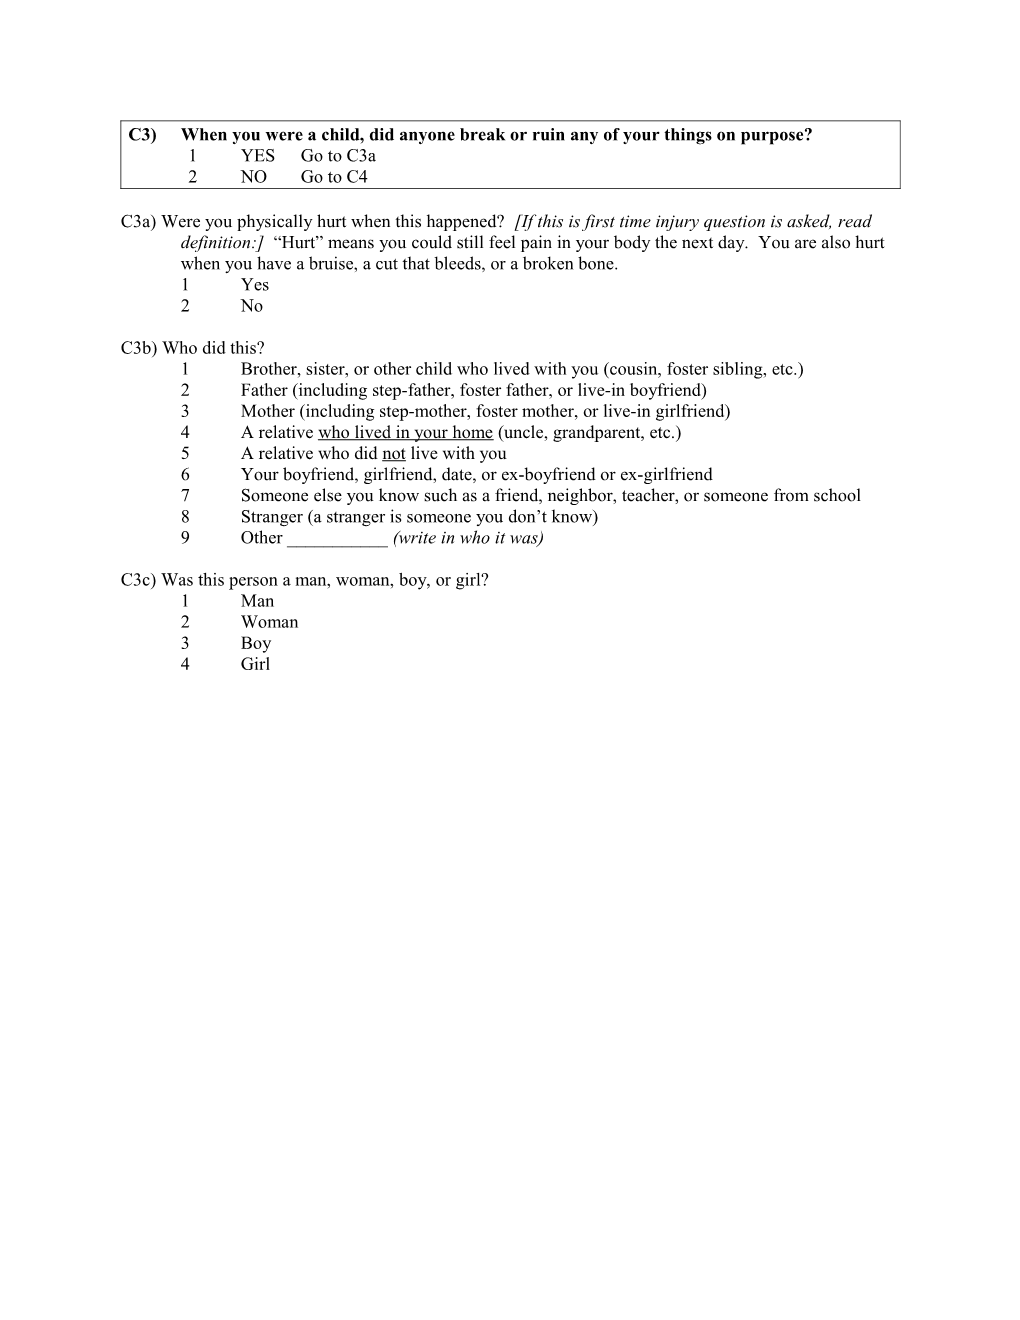 JVQ-R2, Abbreviated Interview Version, Adult Retrospective Form